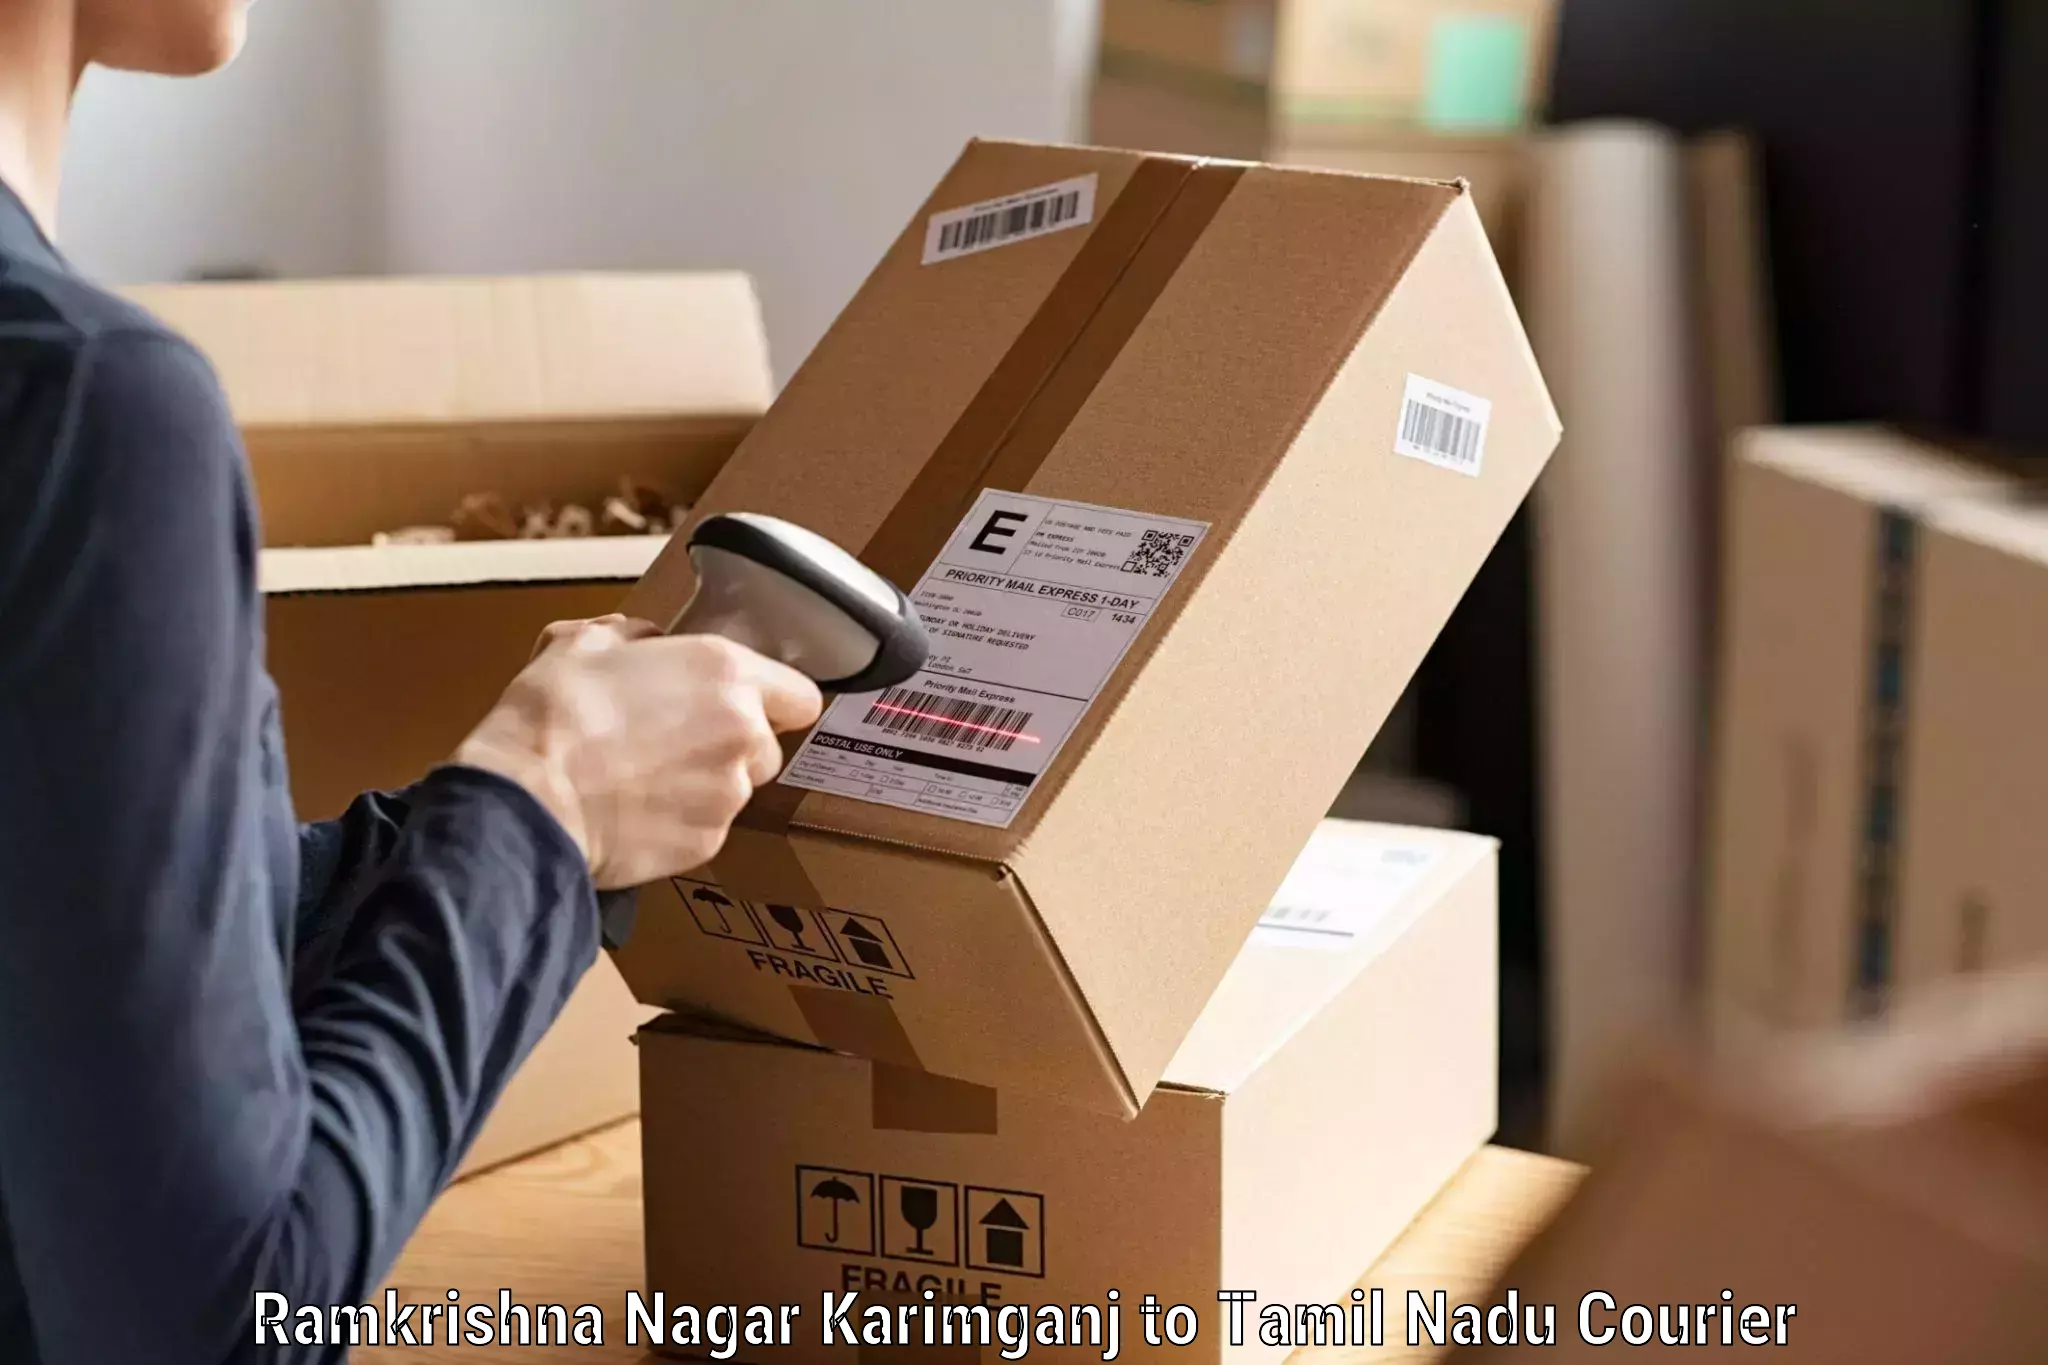 Efficient parcel tracking Ramkrishna Nagar Karimganj to Tirukalukundram